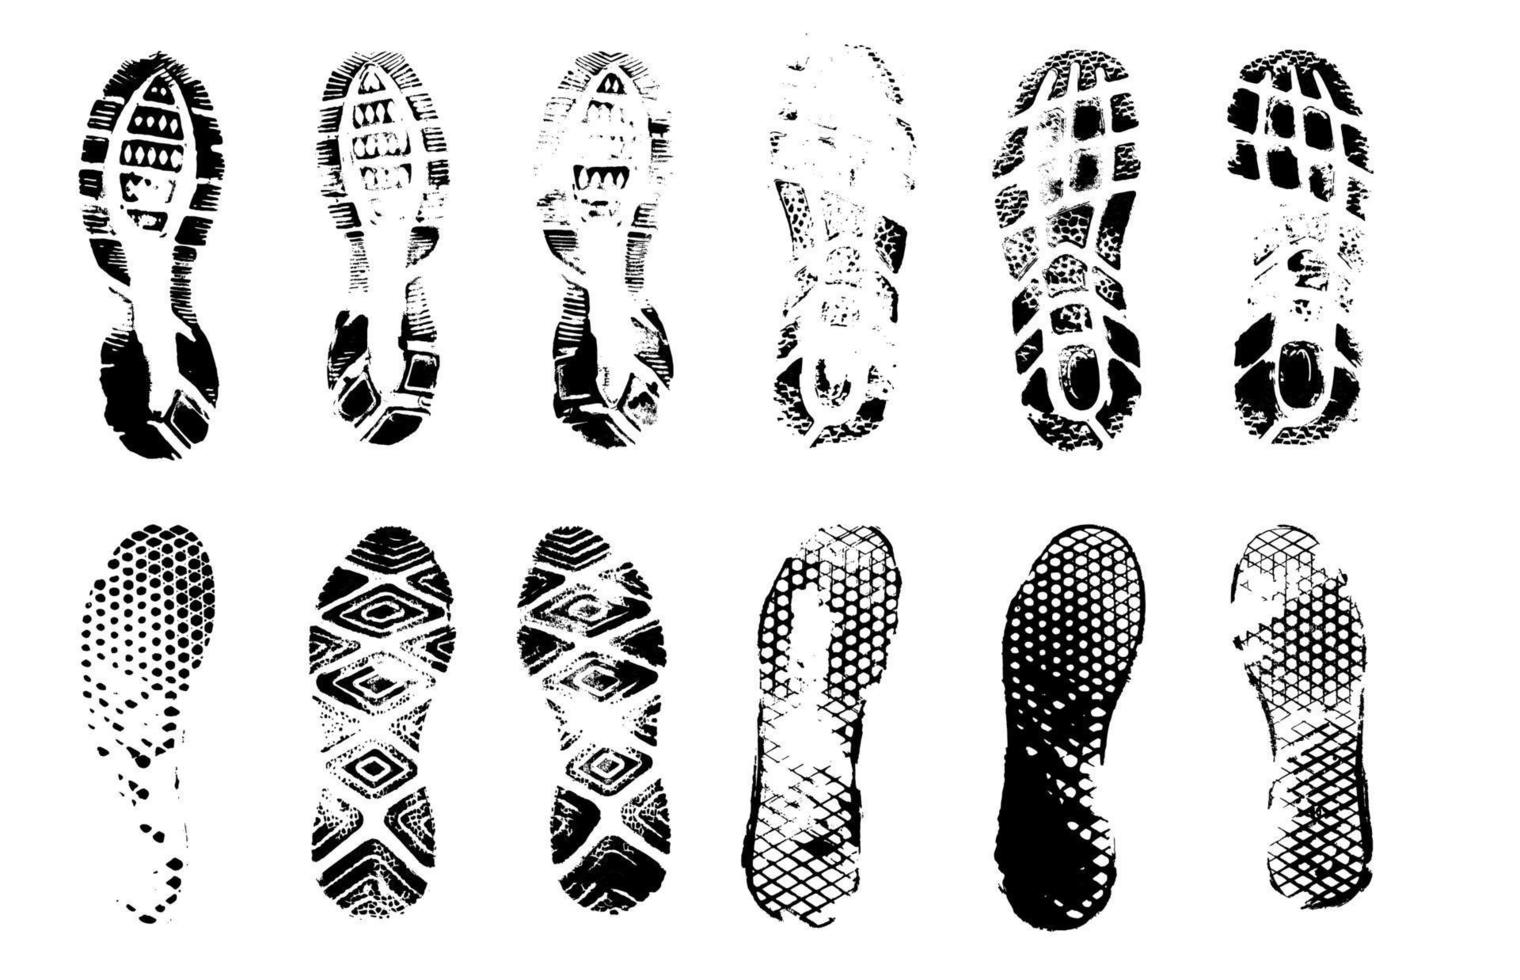 impronte di scarpe umane silhouette, set vettoriale. vettore